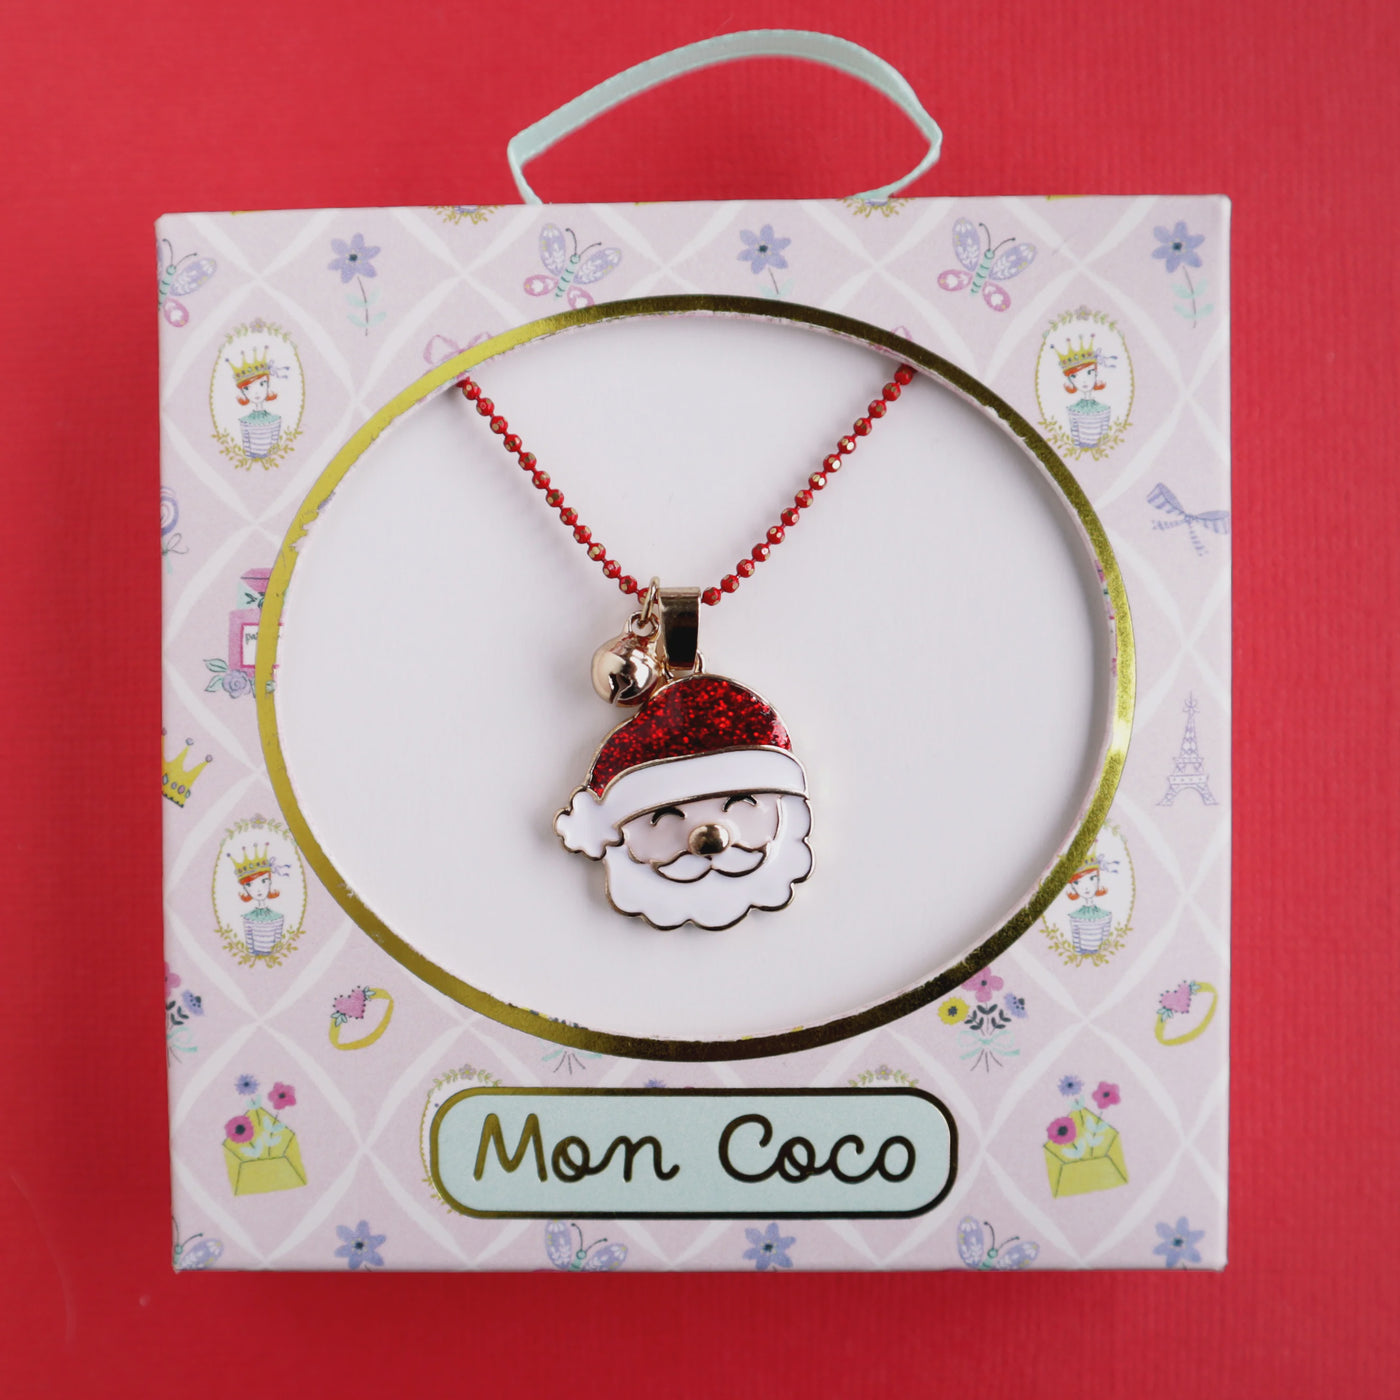 Mon Coco Dear Santa Necklace